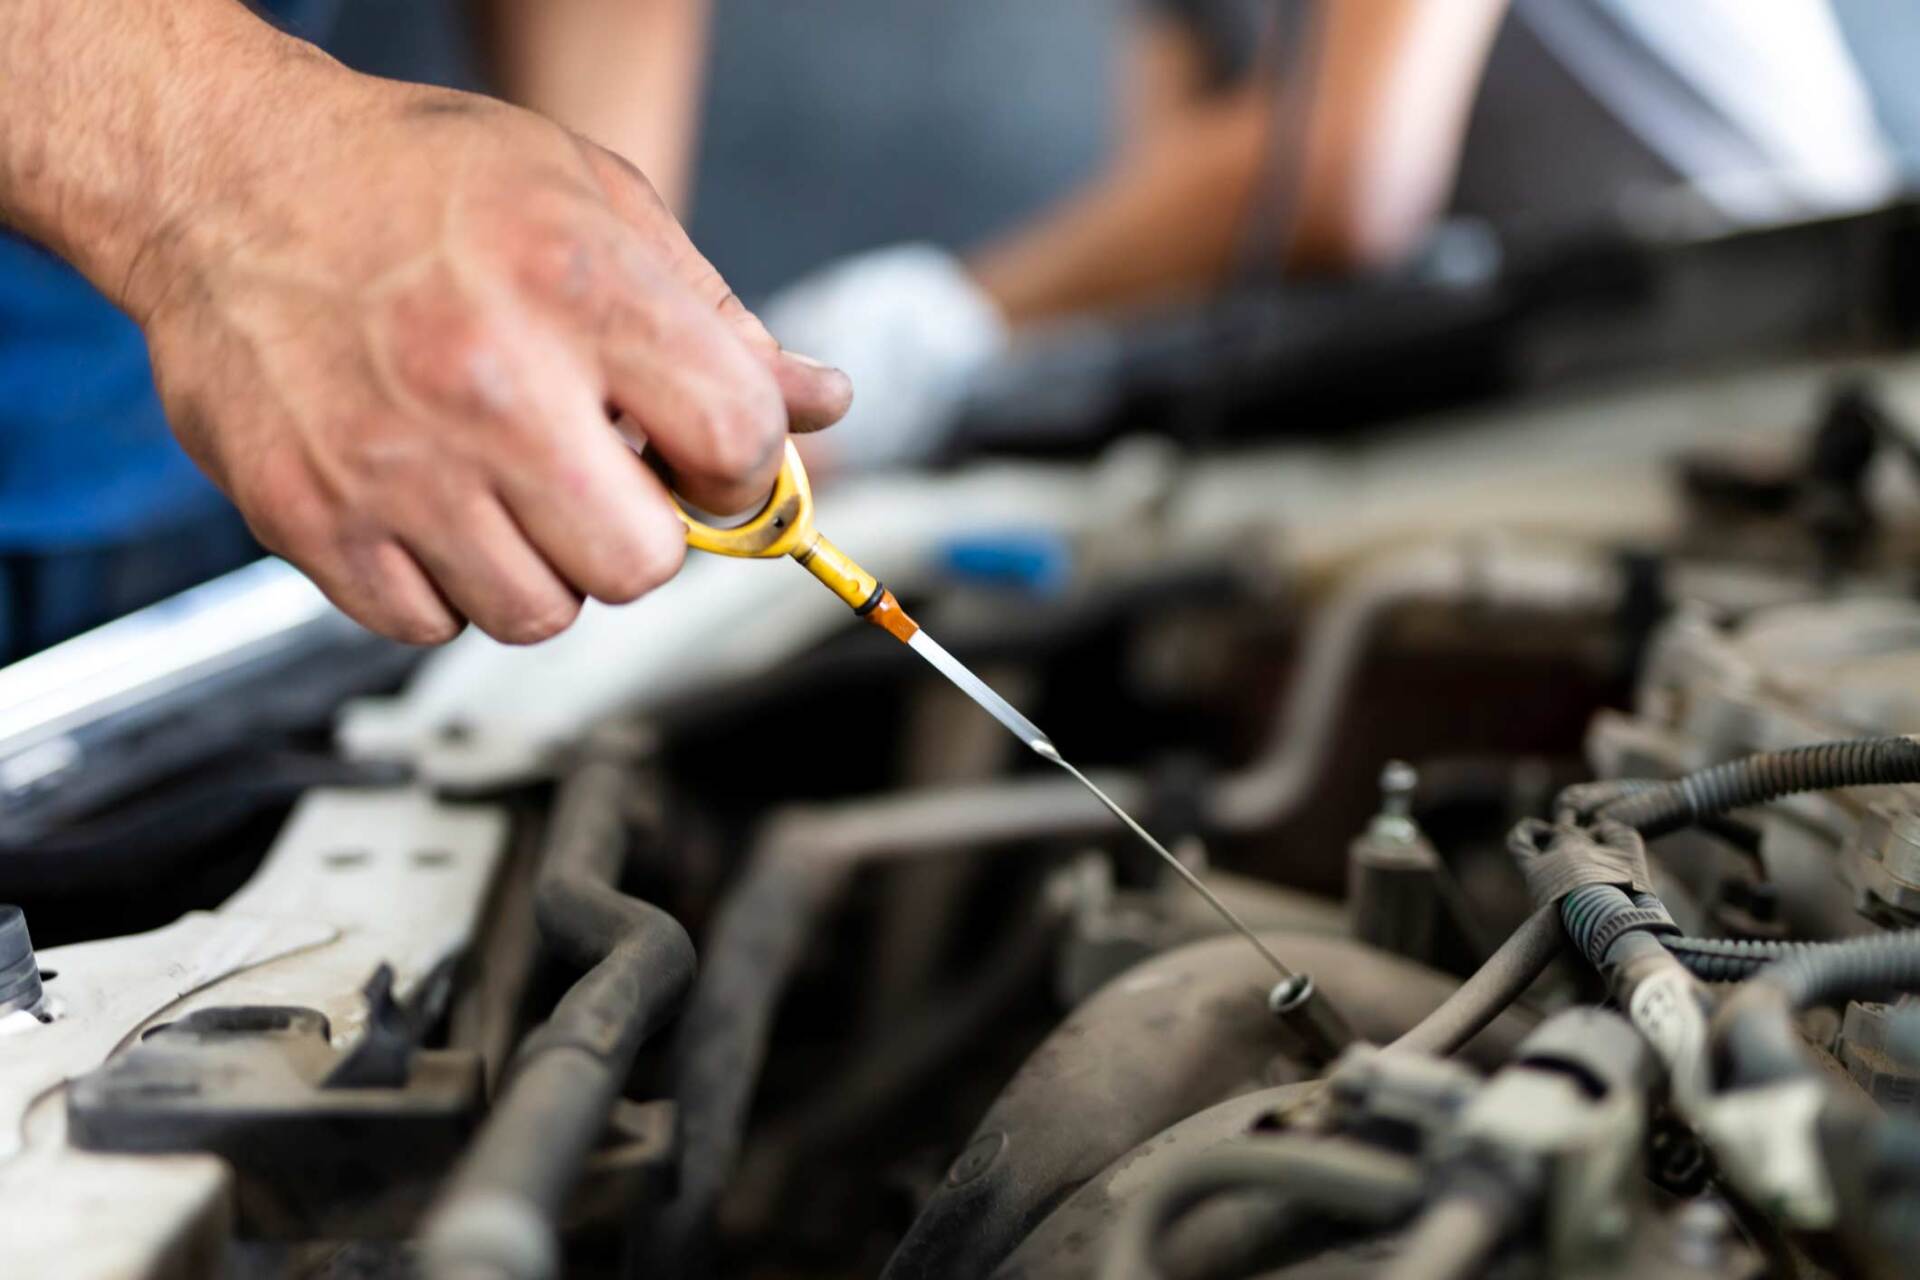 Mechanic inserting oil into car — Gary, IN — Macer Transportation